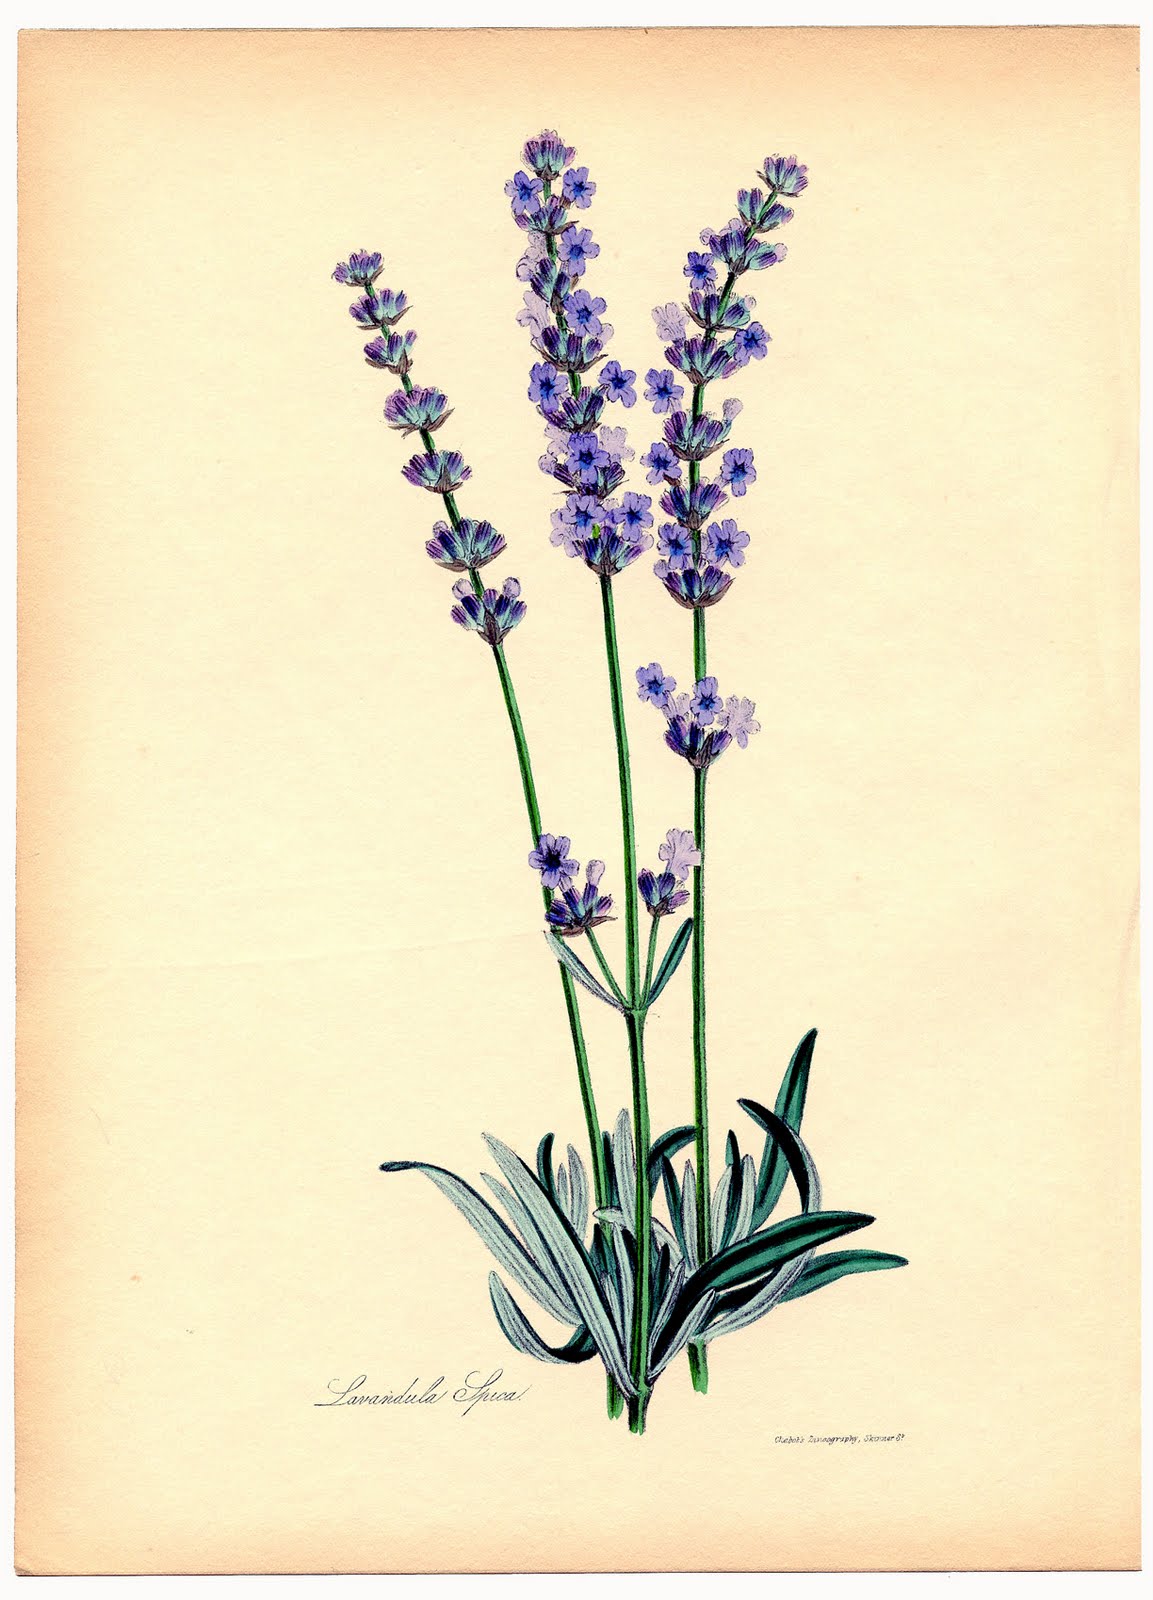 Instant Art Printable - Superb Lavender Botanical - The Graphics Fairy